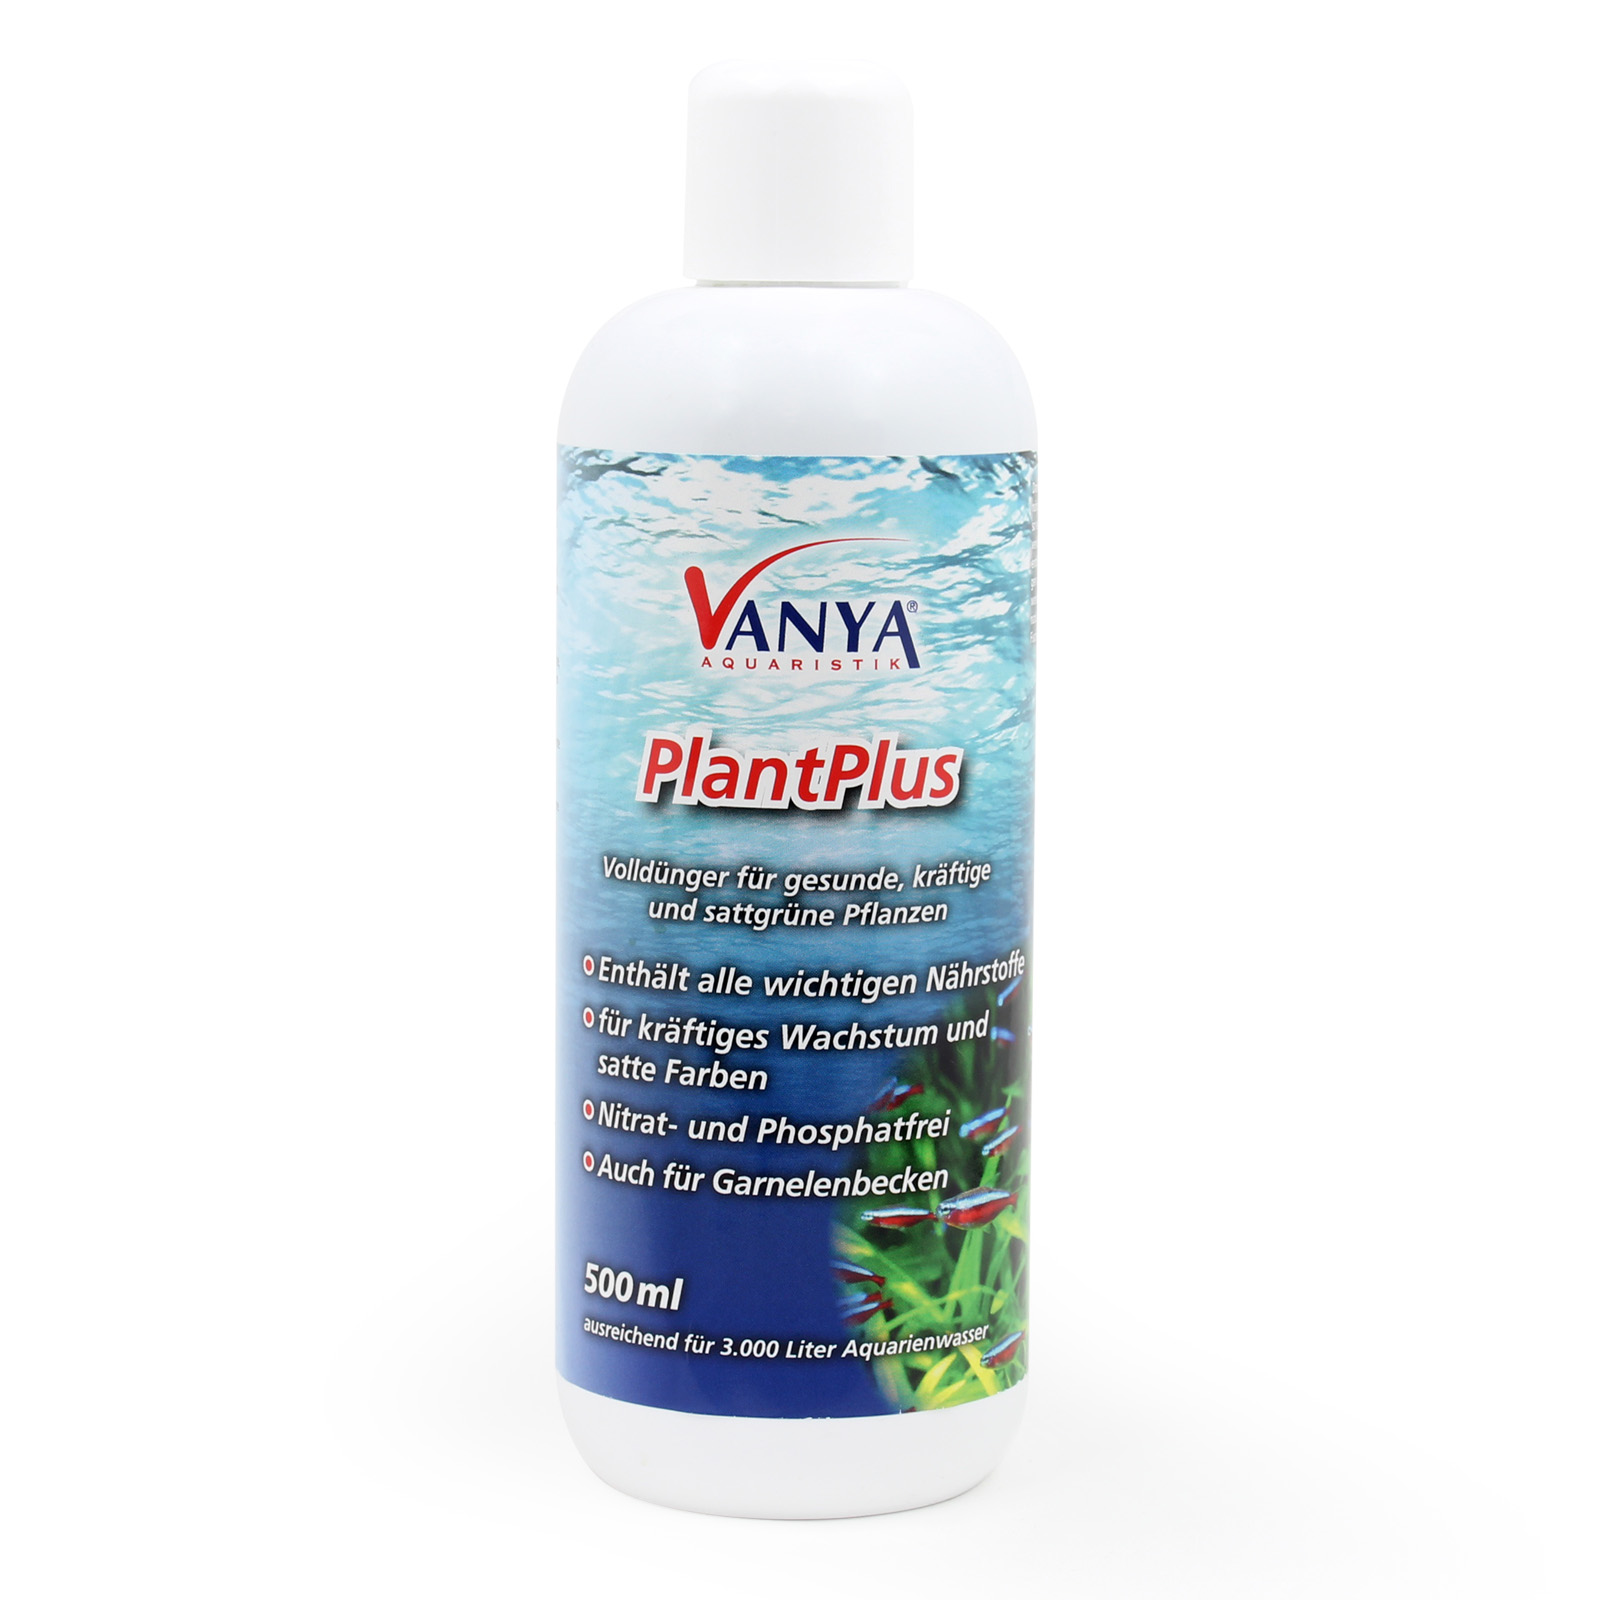 Vanya PlantPlus 500ml Pflanzendünger Aquarium fördert Wachstum & Farbe